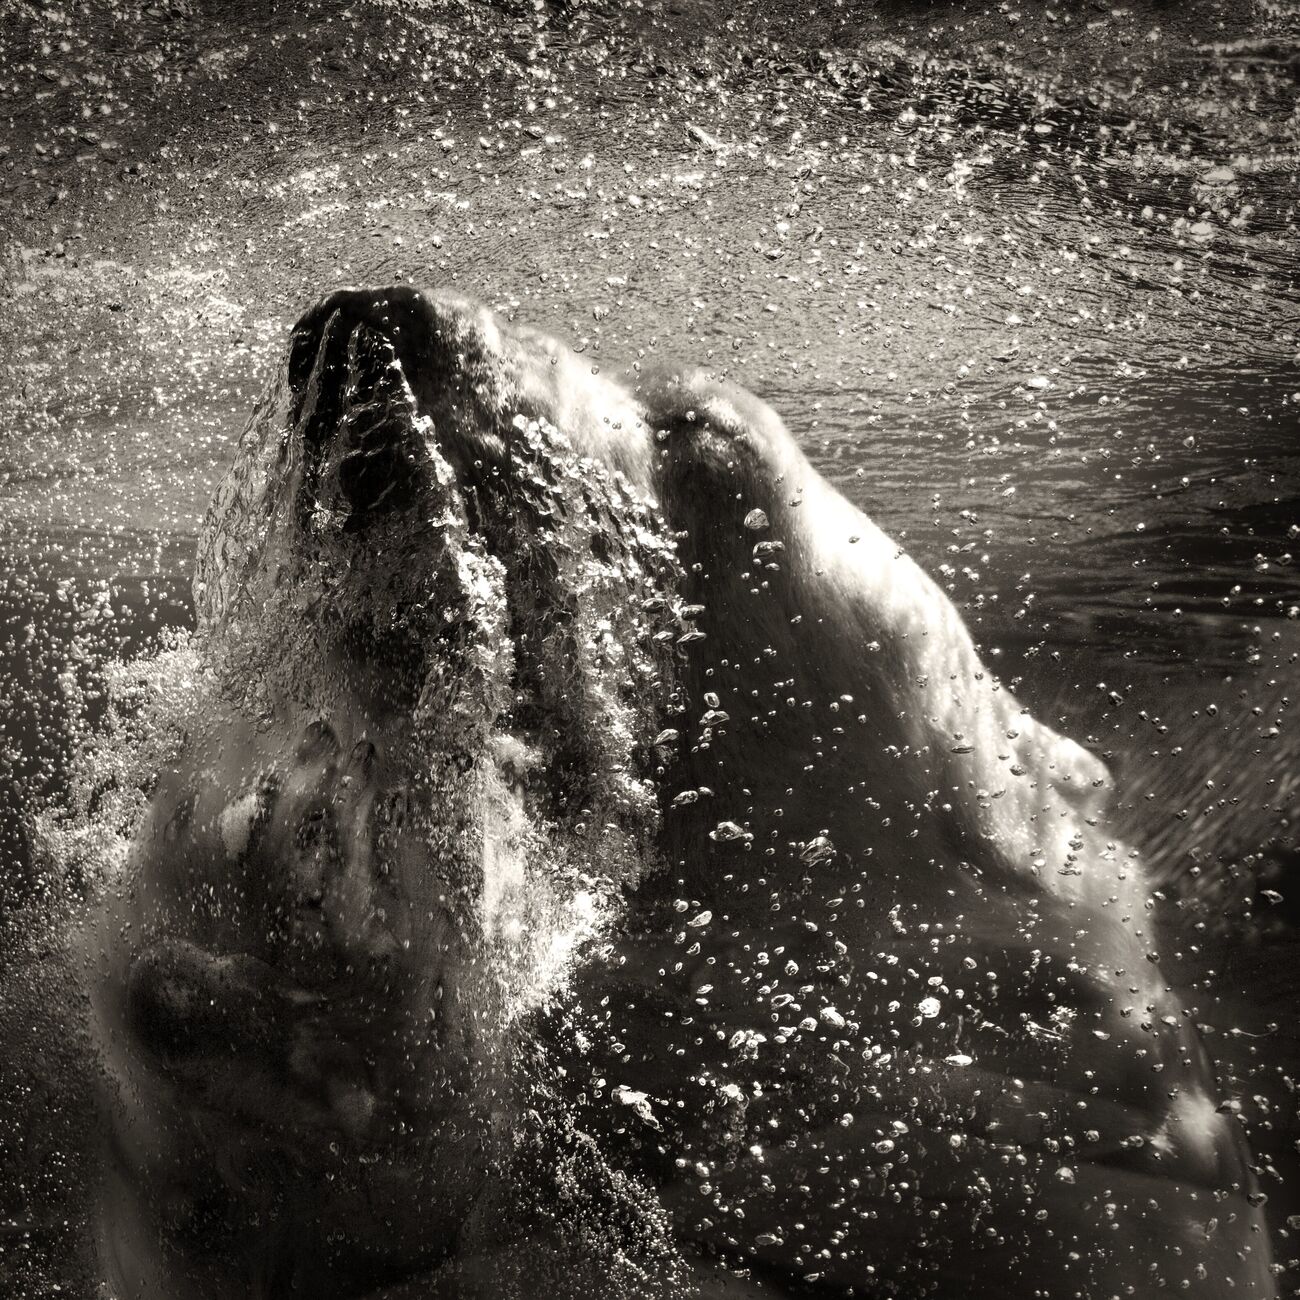 Underwater Polar Bear. Septembre 2009. Ref-1226 - Denis Olivier Photographie